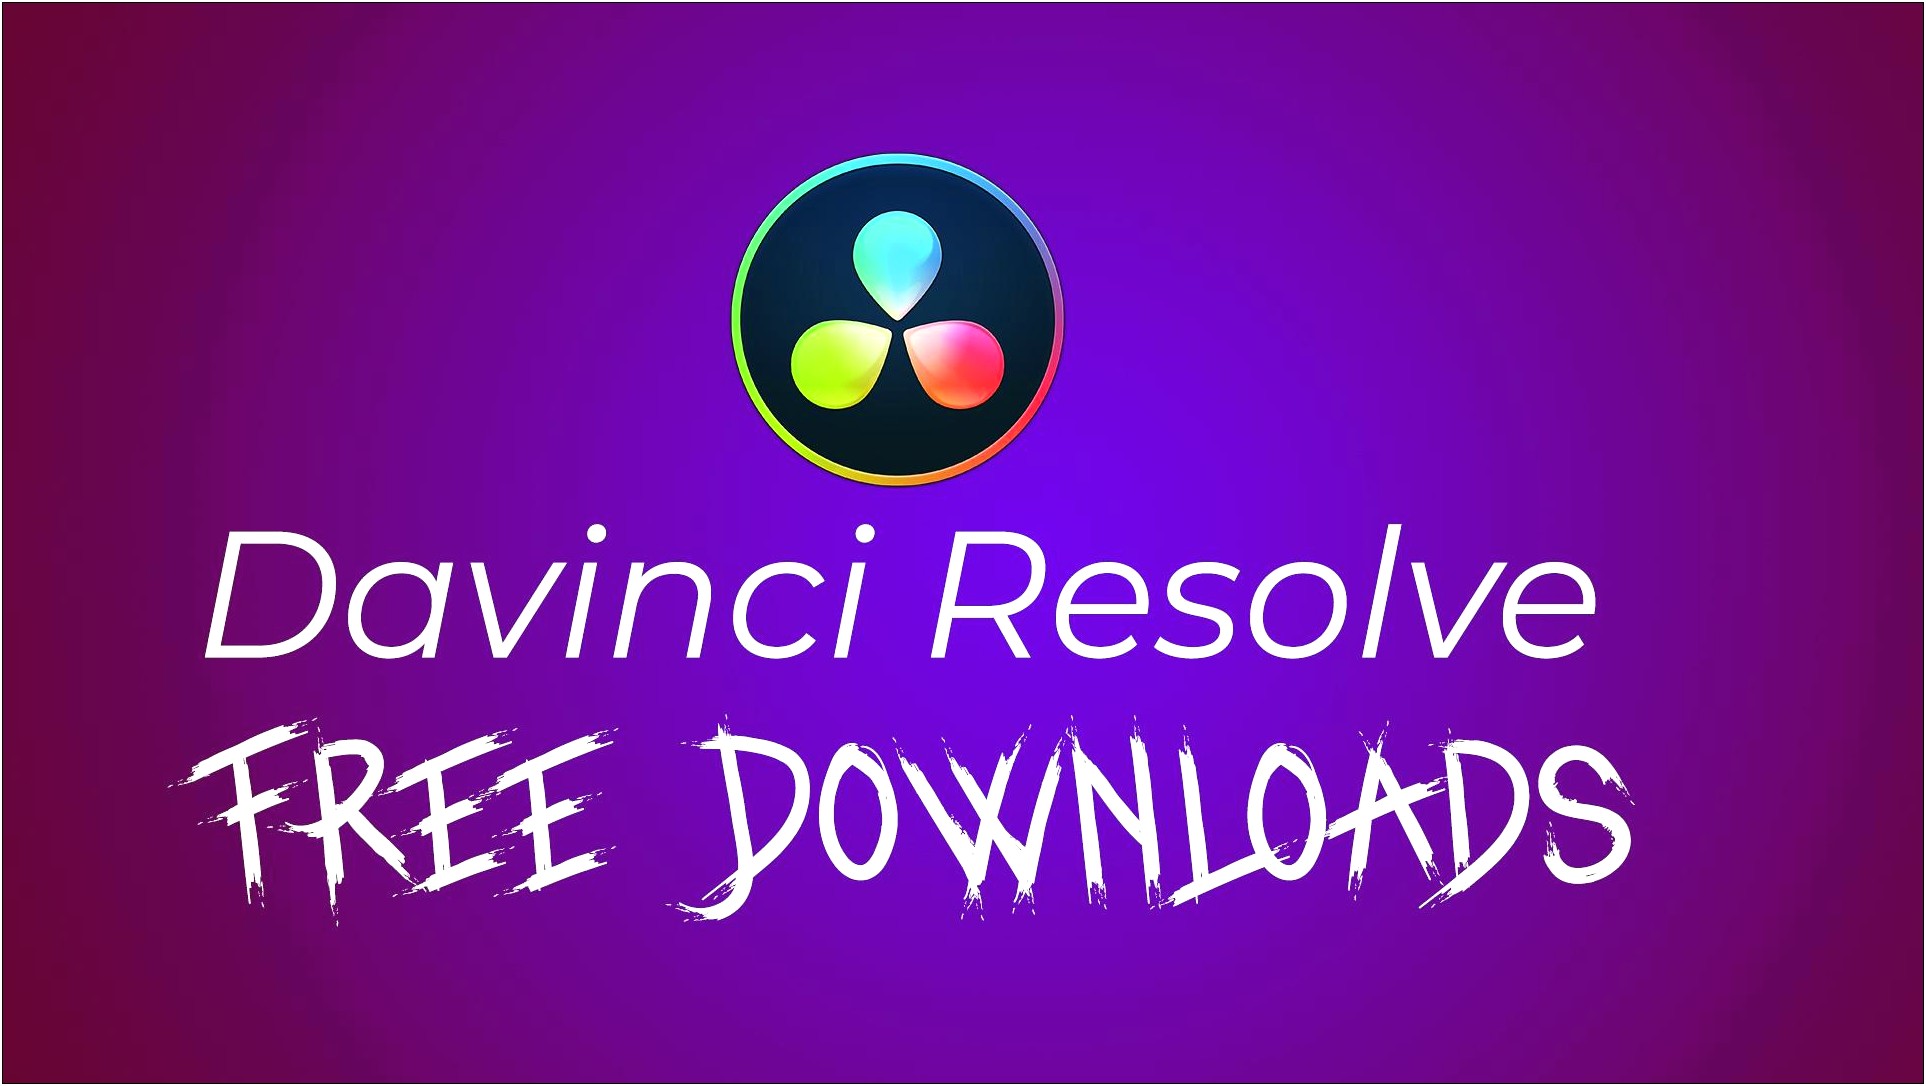 Davinci Resolve 16 Templates Free Download